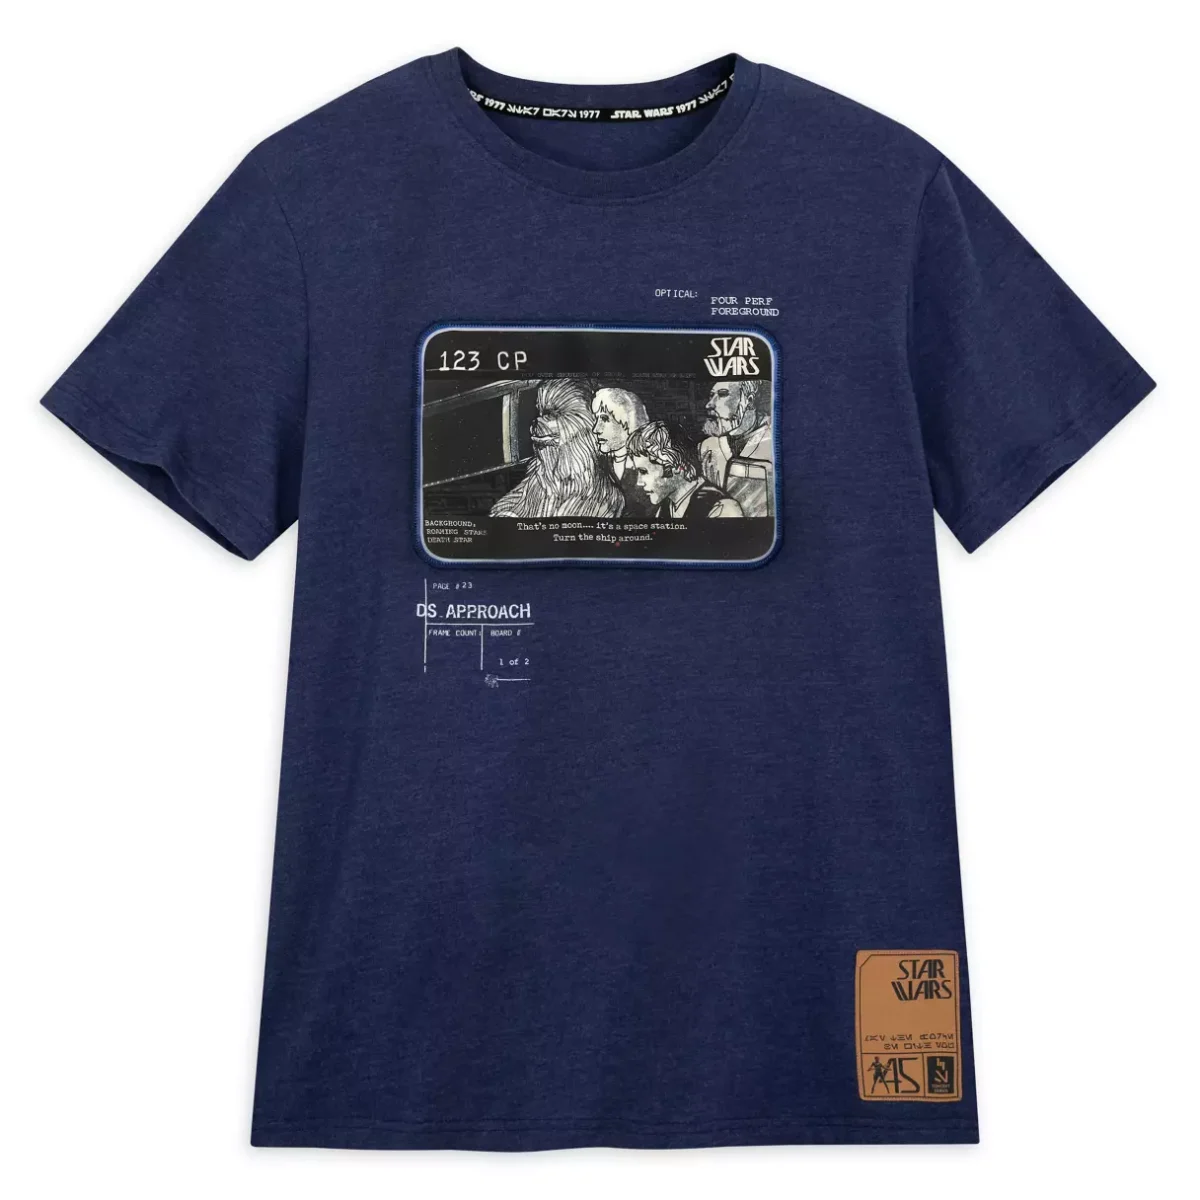 Star Wars concept artwork t-shirt